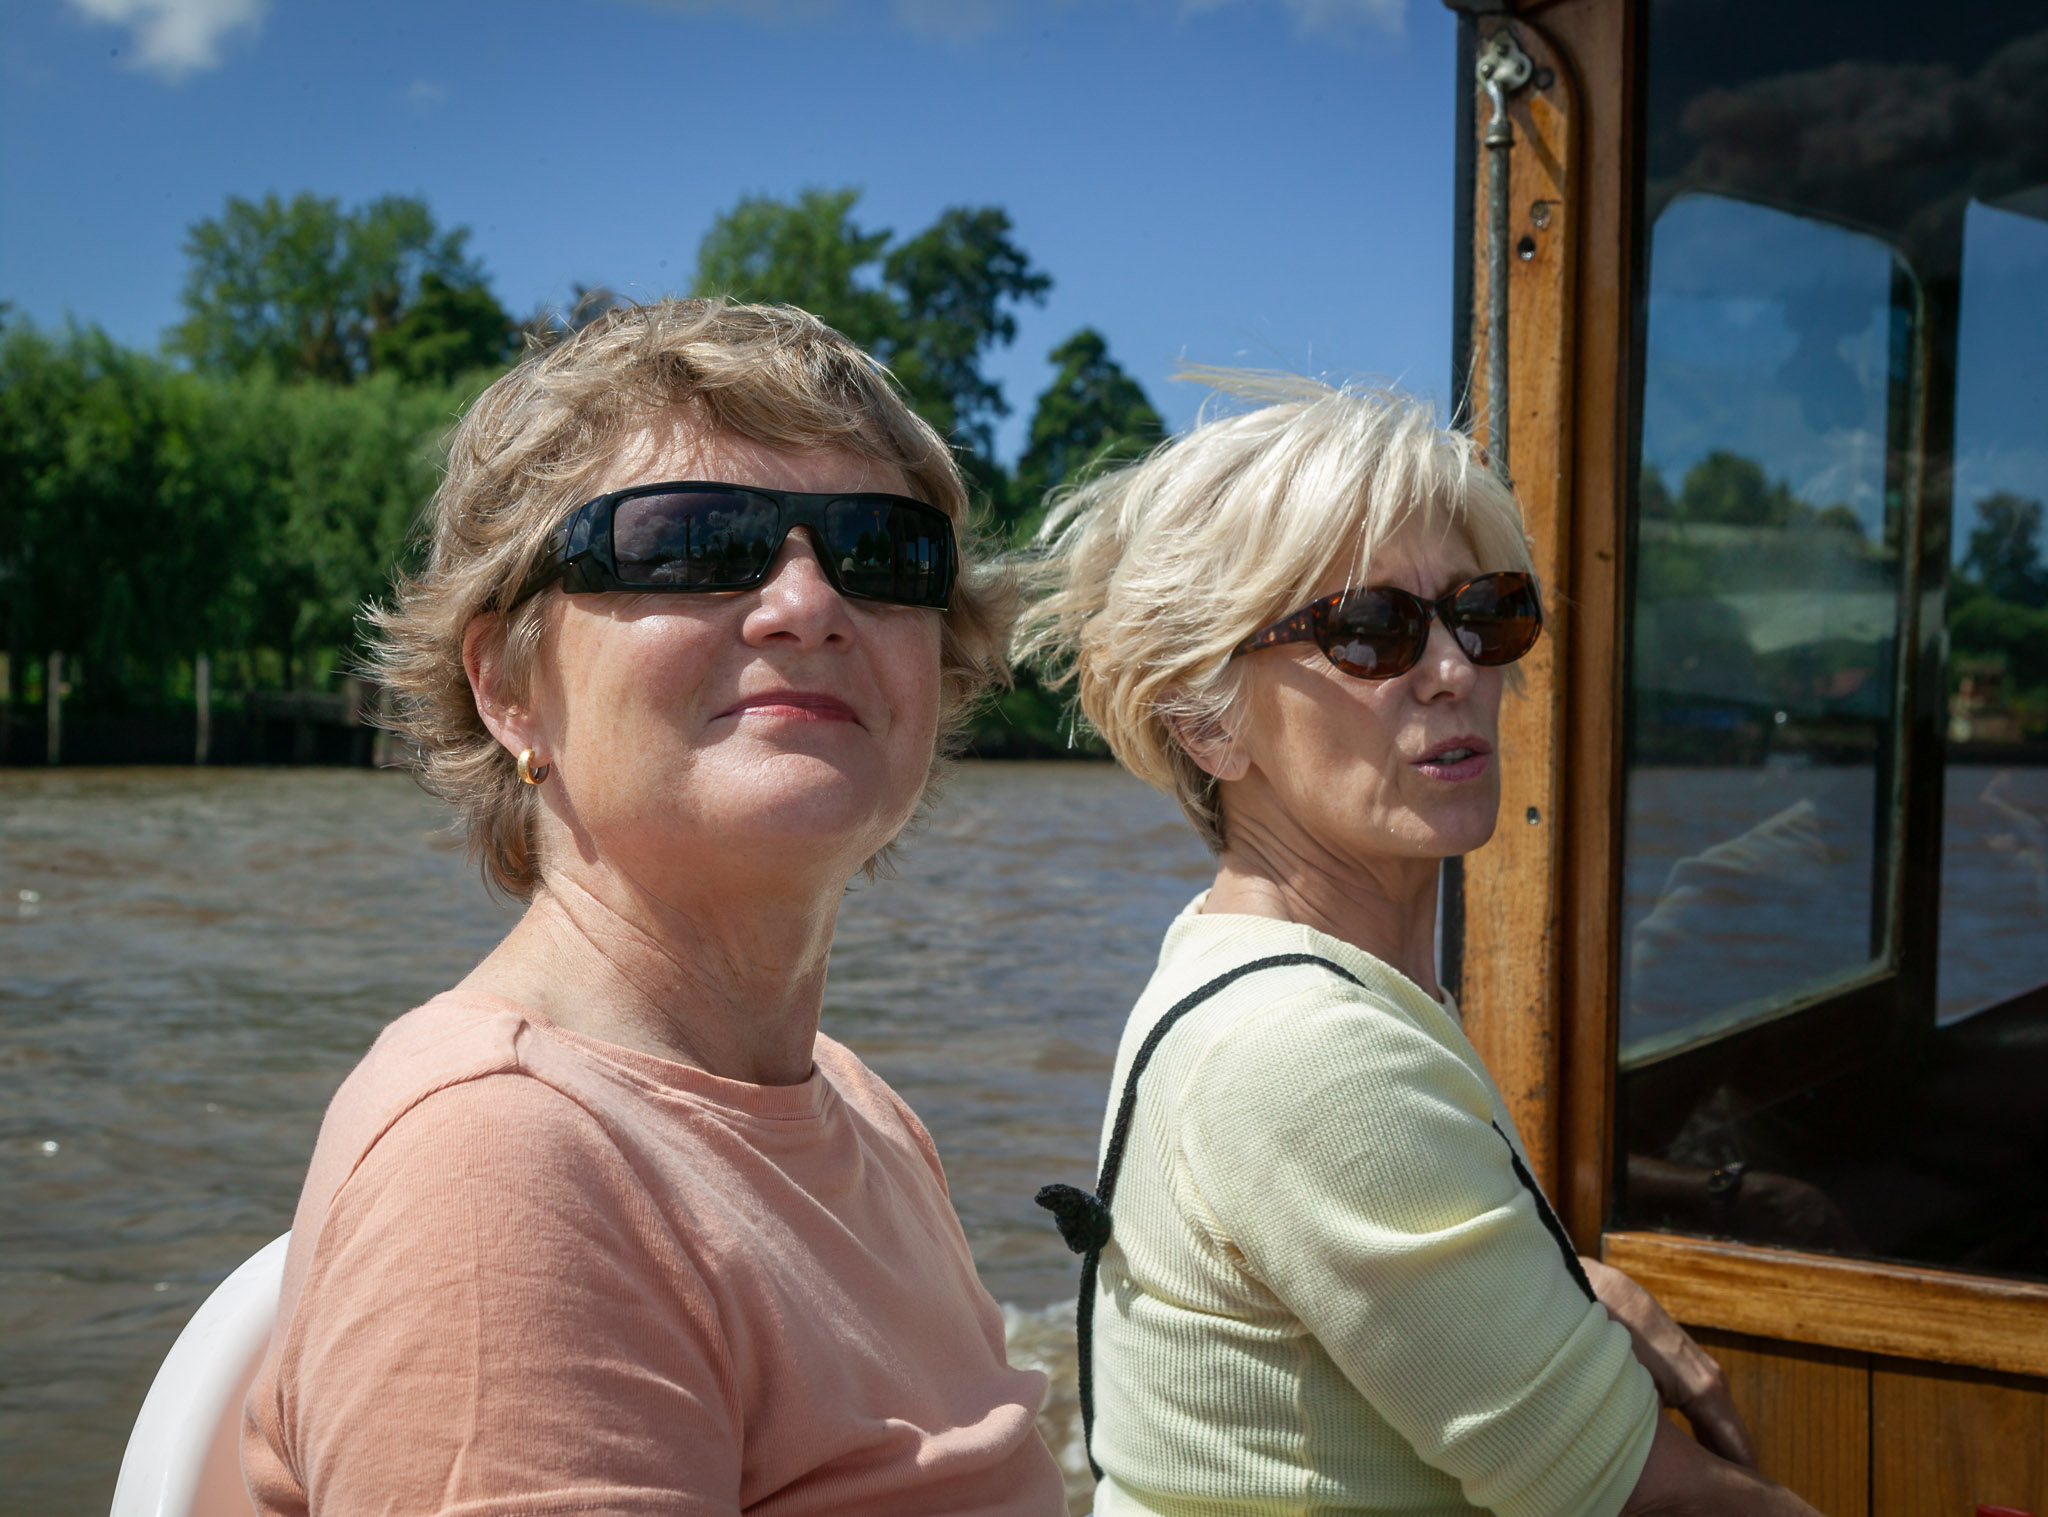 Exploring waterways of Parana Delta